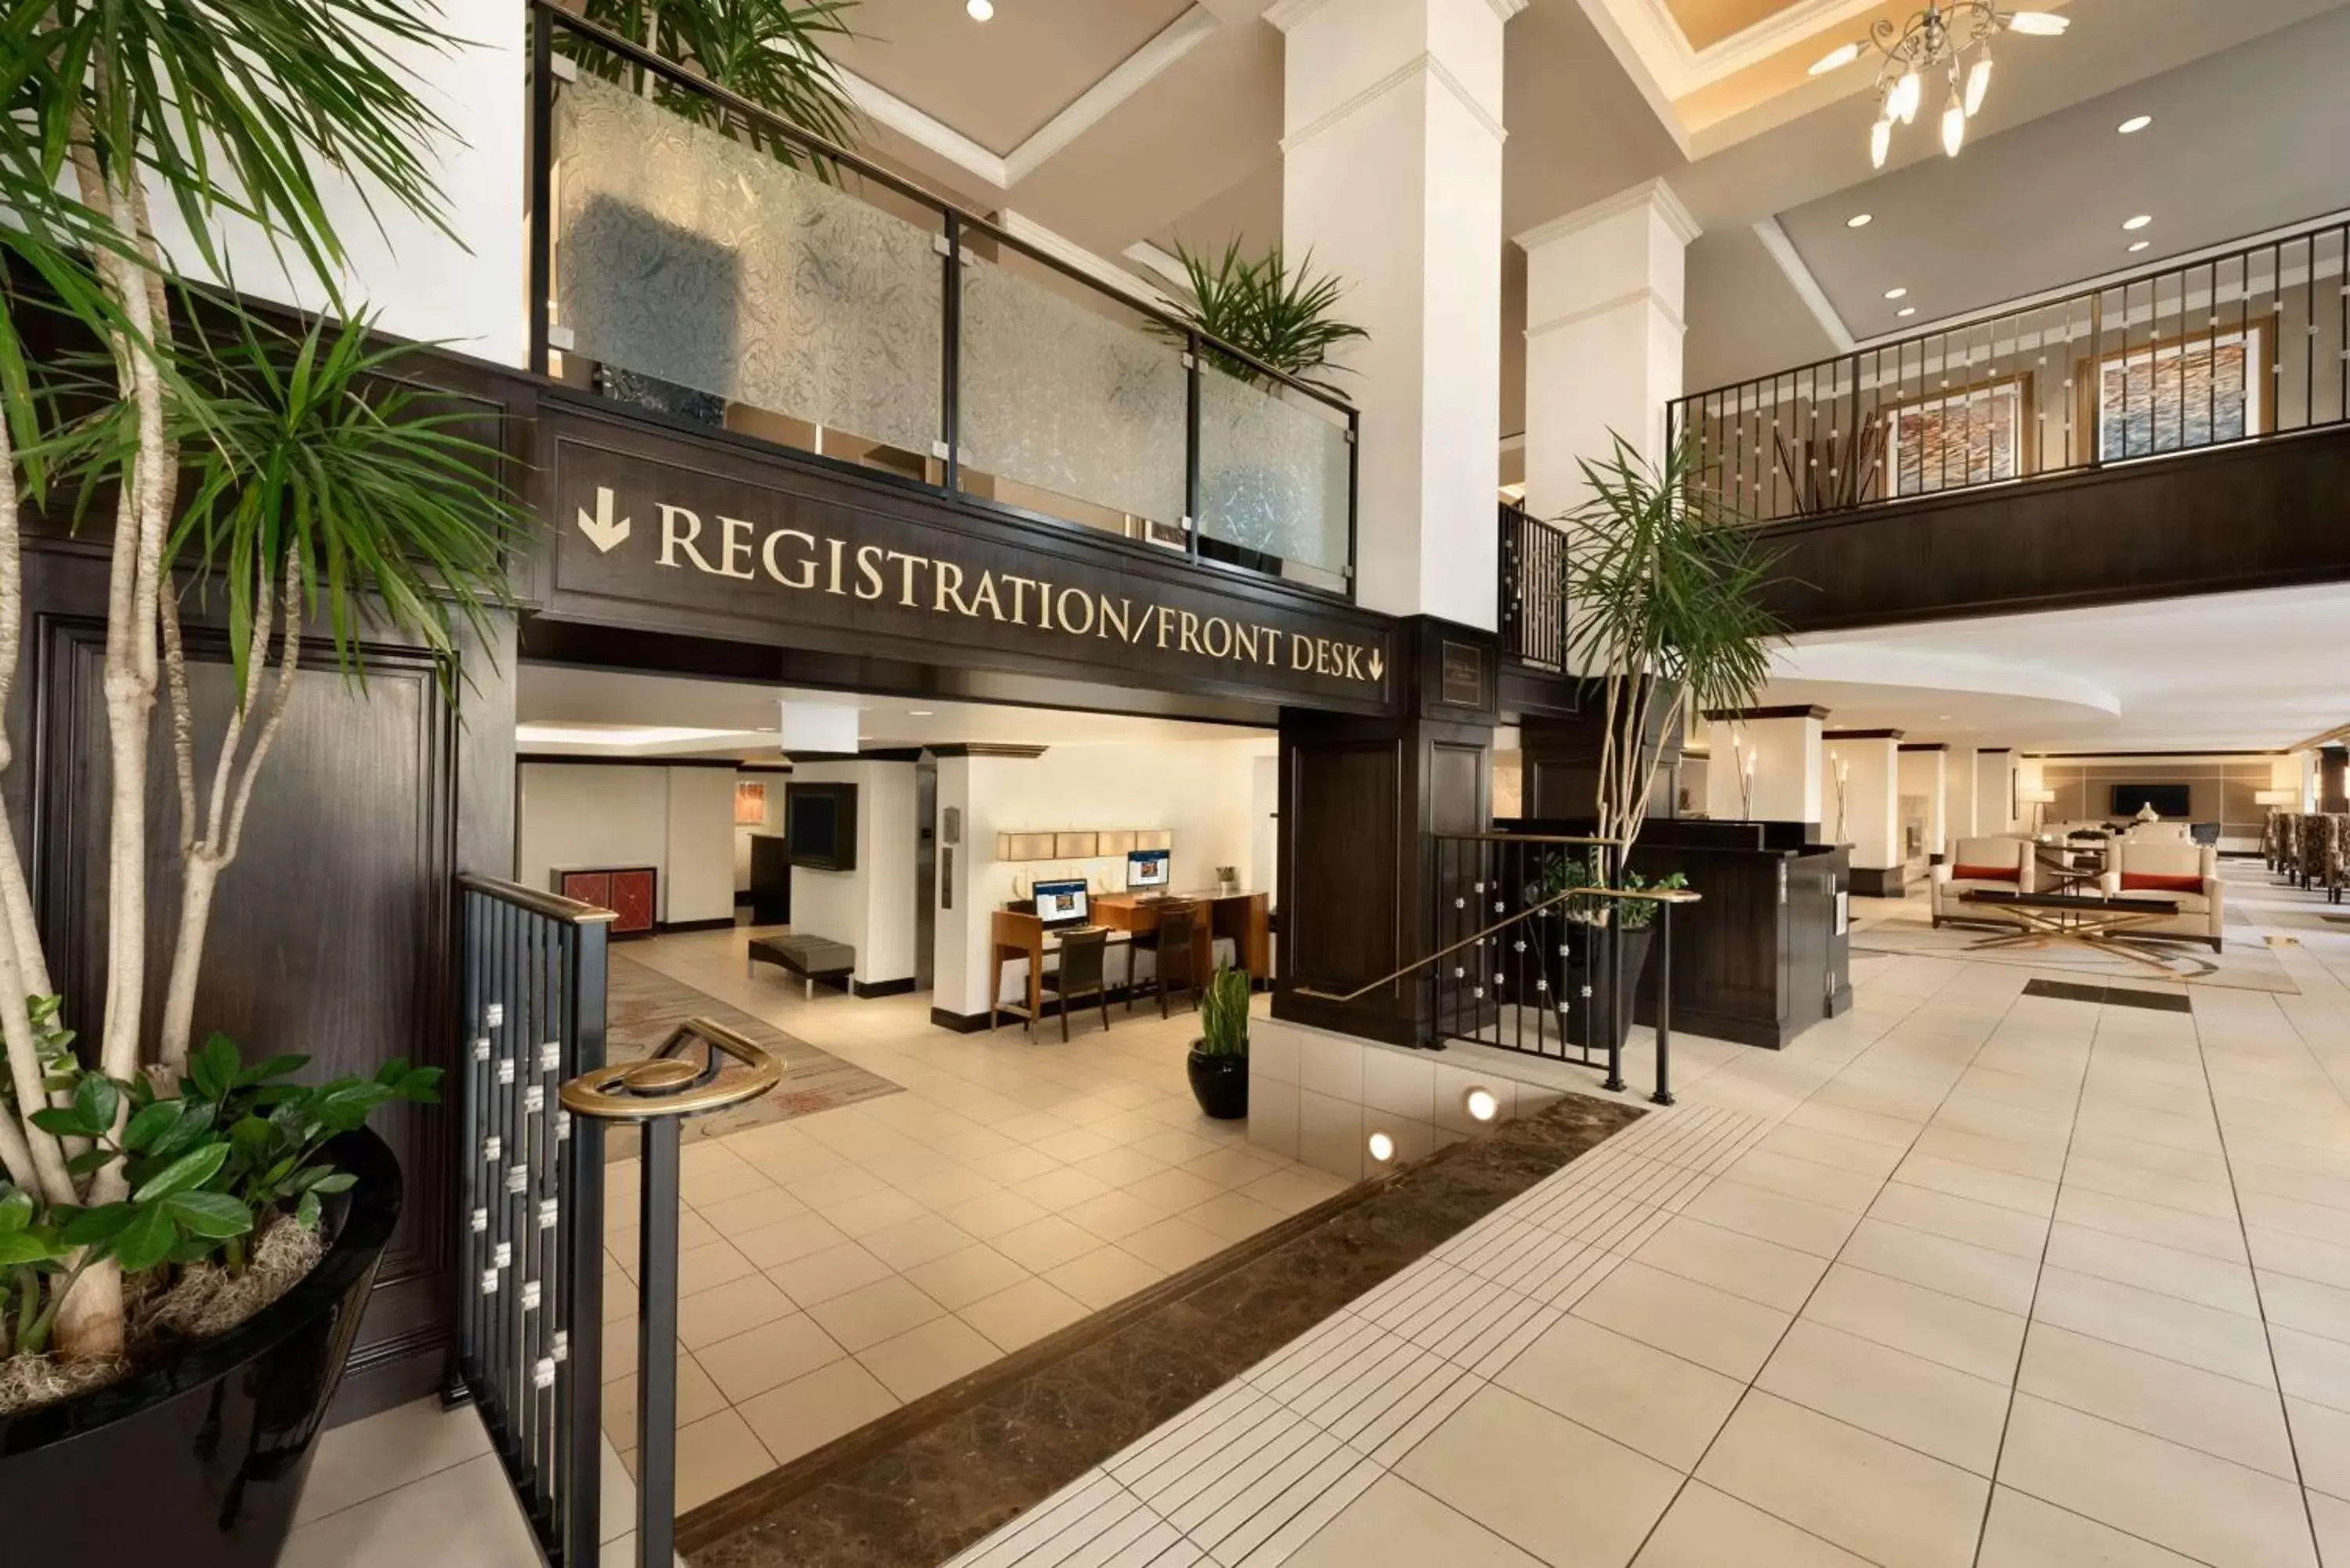 Lobby or reception in Hilton Orrington/Evanston